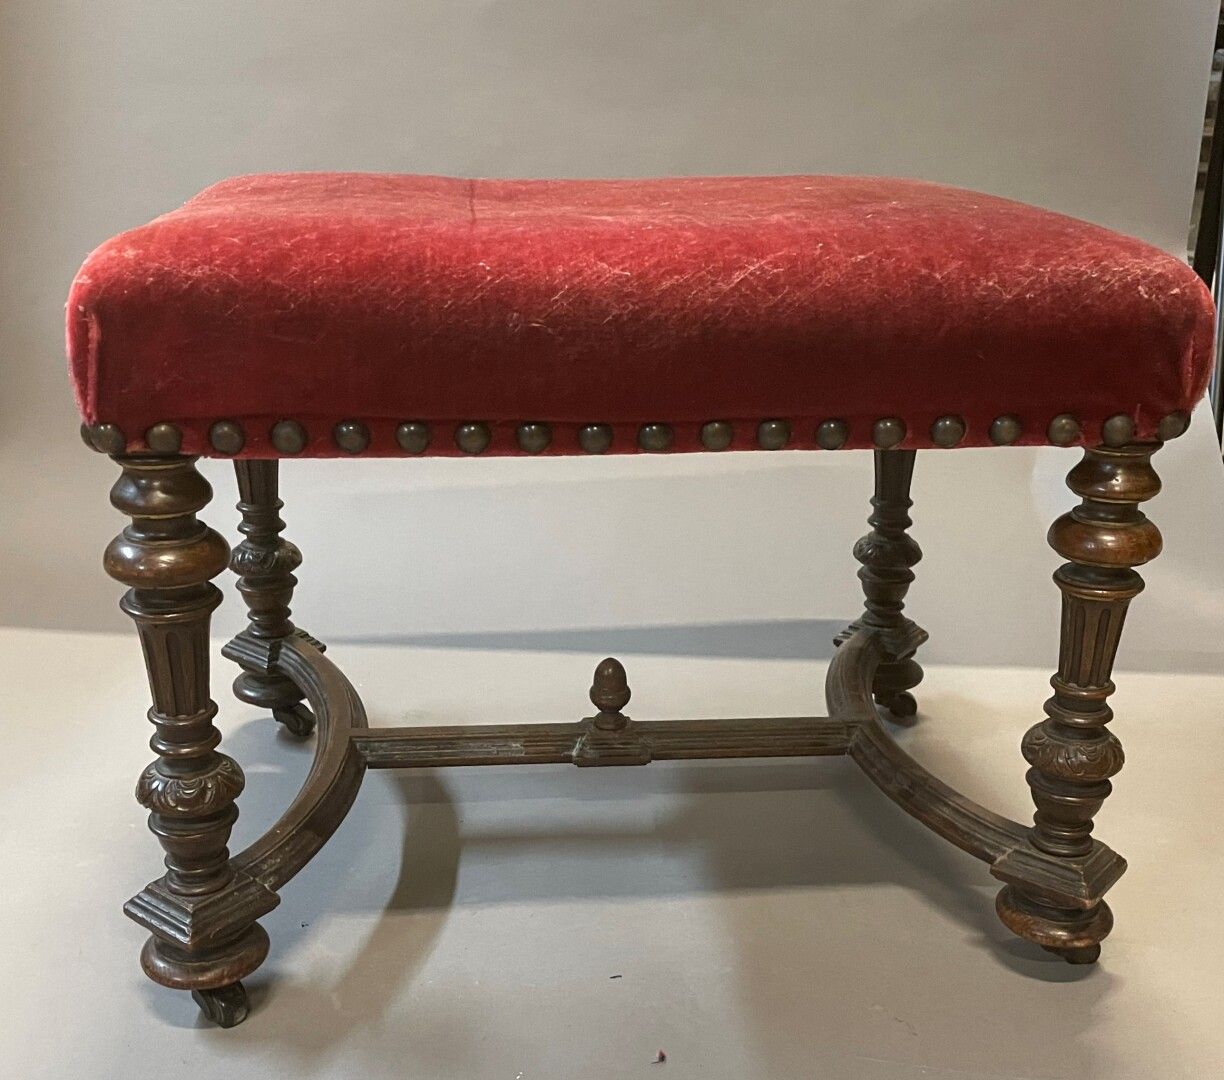 Null 凳子有成型和雕刻的木腿，轮子，座位上有红色的天鹅绒装饰。

44 x 60 x 48厘米